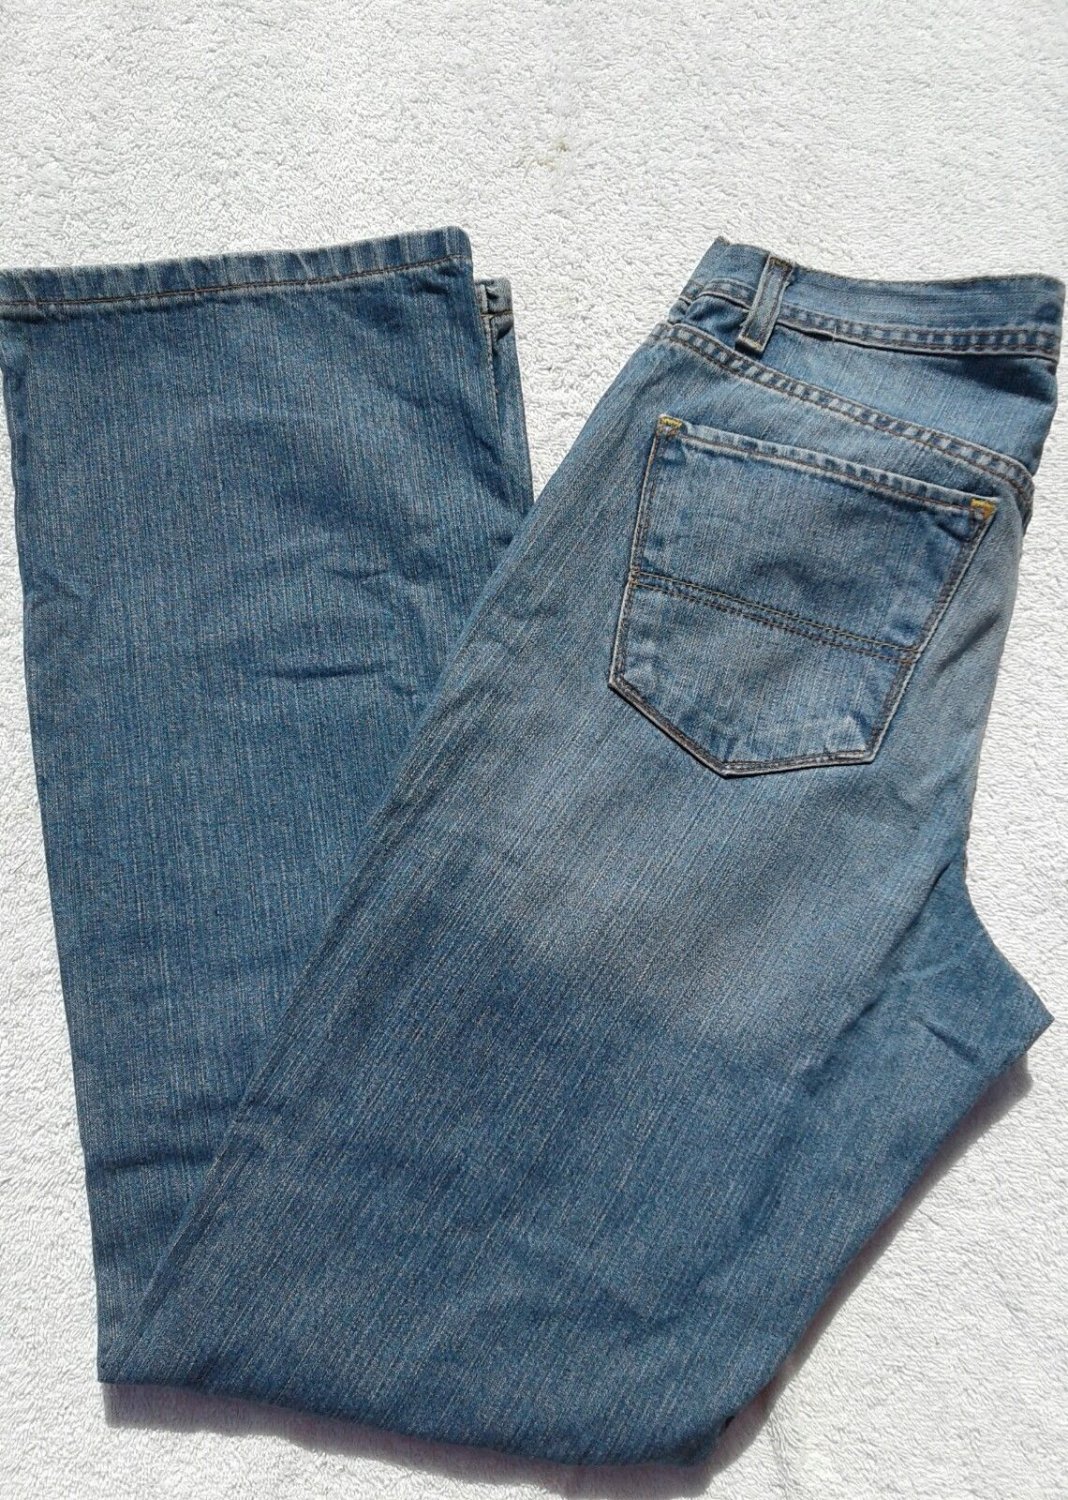 Tommy Hilfiger Women's Classic Boot Cut Jeans 6R